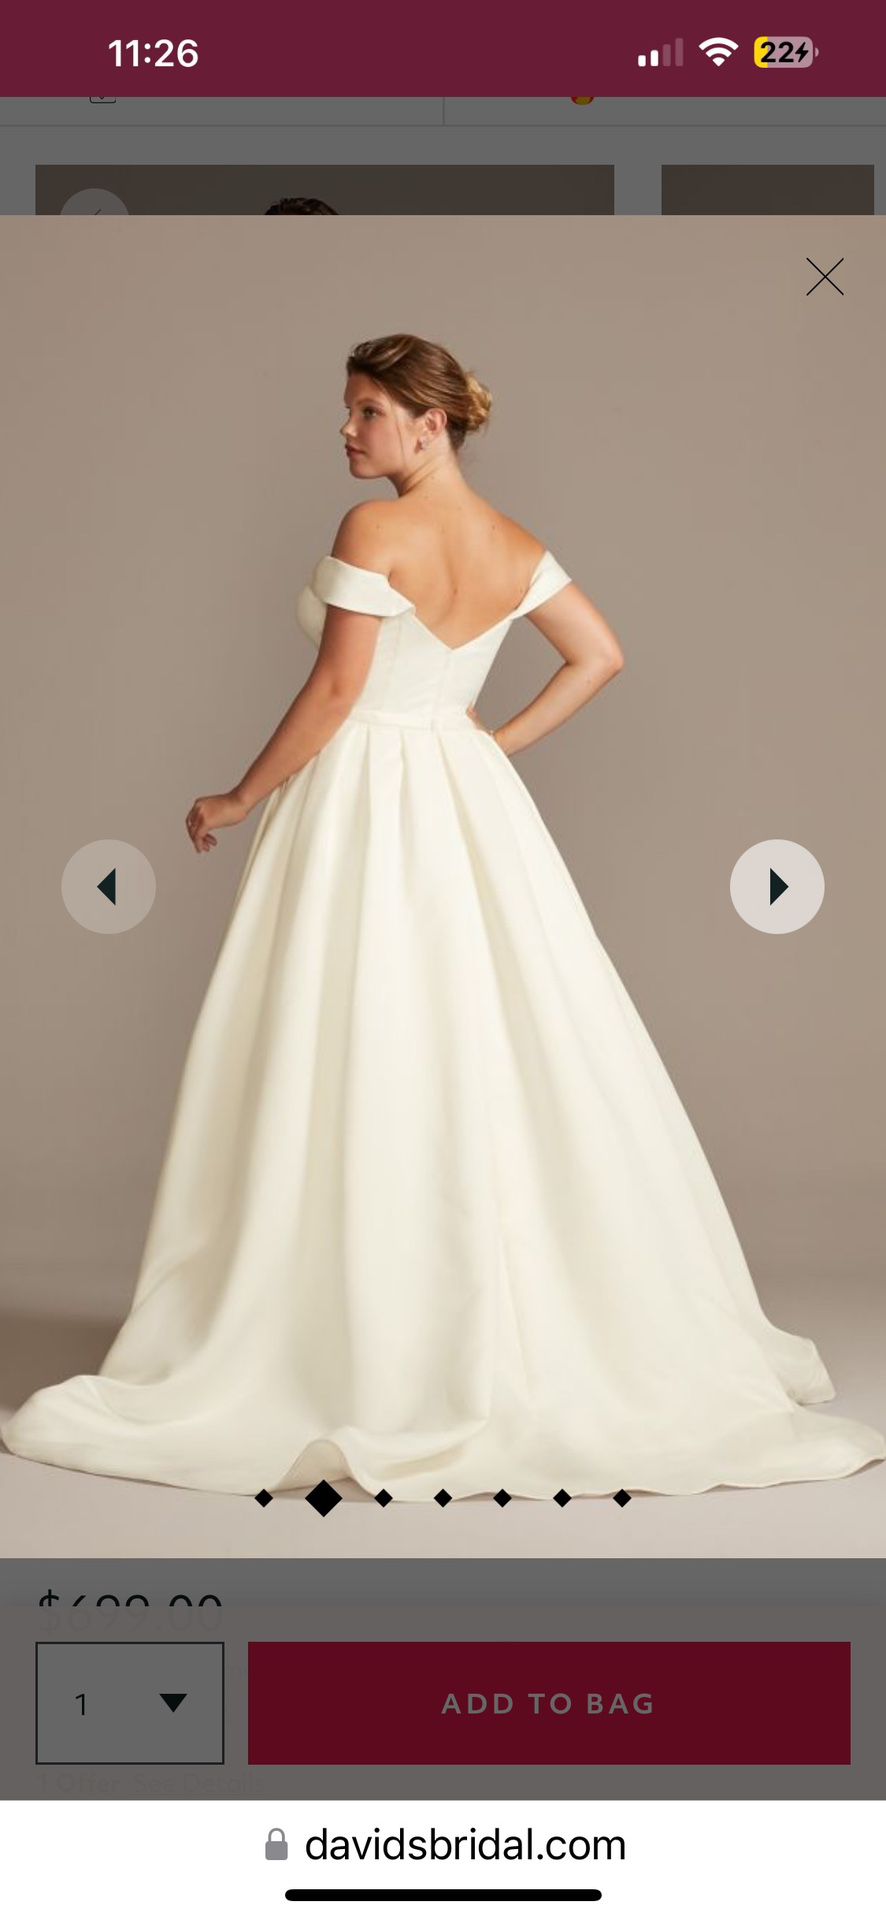 NEW** David’s Bridal off shoulder satin gown wedding dress - Ivory - size 24W plus garment bag